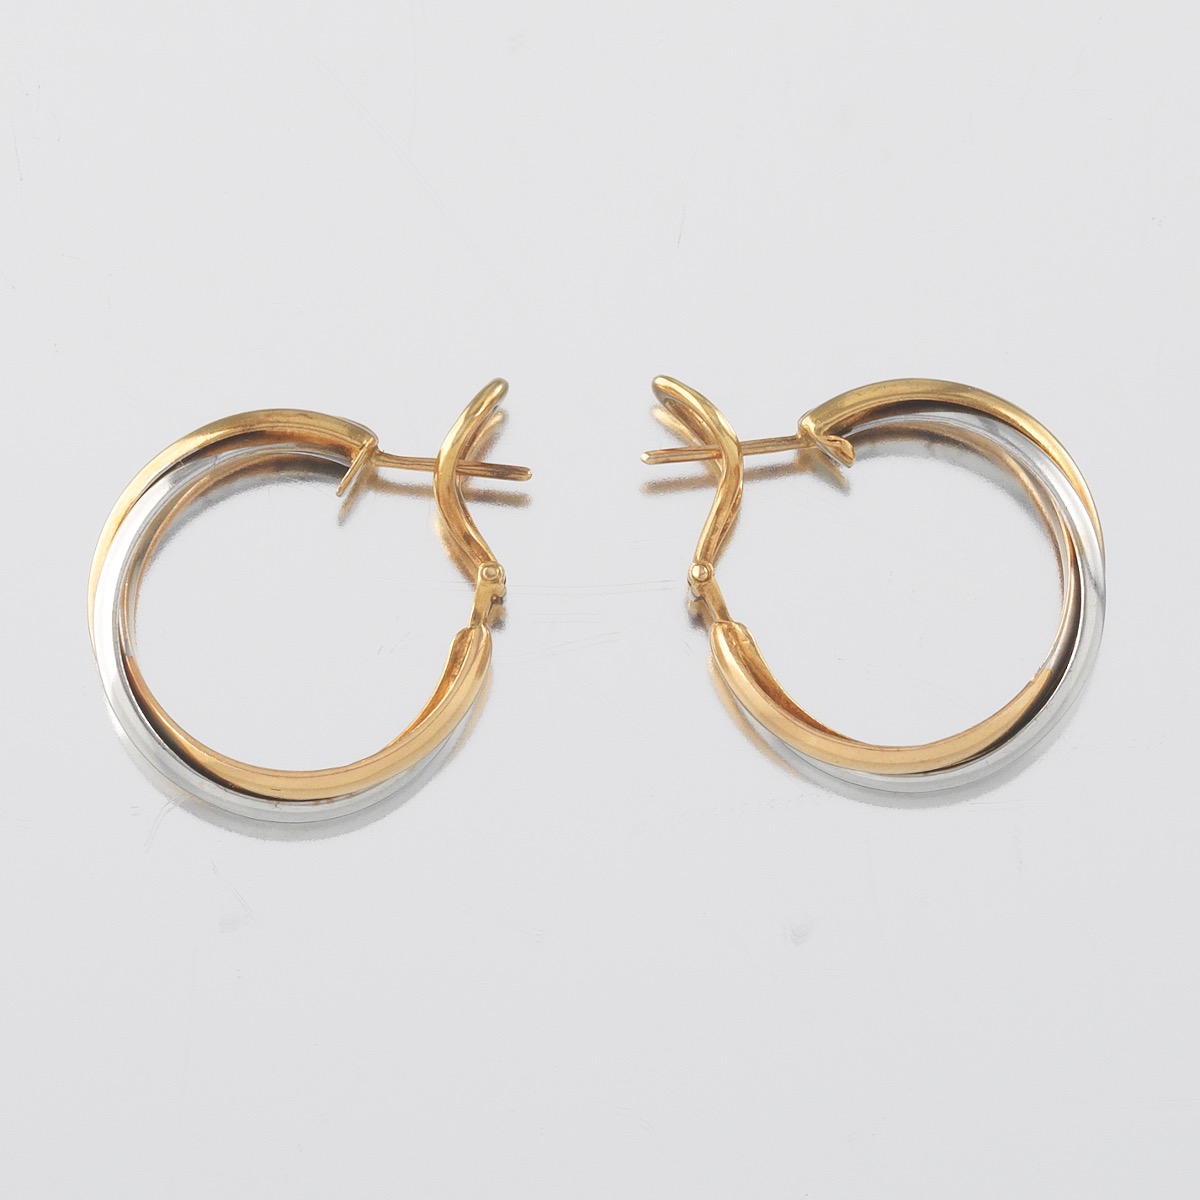 Pair of Cartier-Style Trinity Gold Hoop Earrings - Image 5 of 7